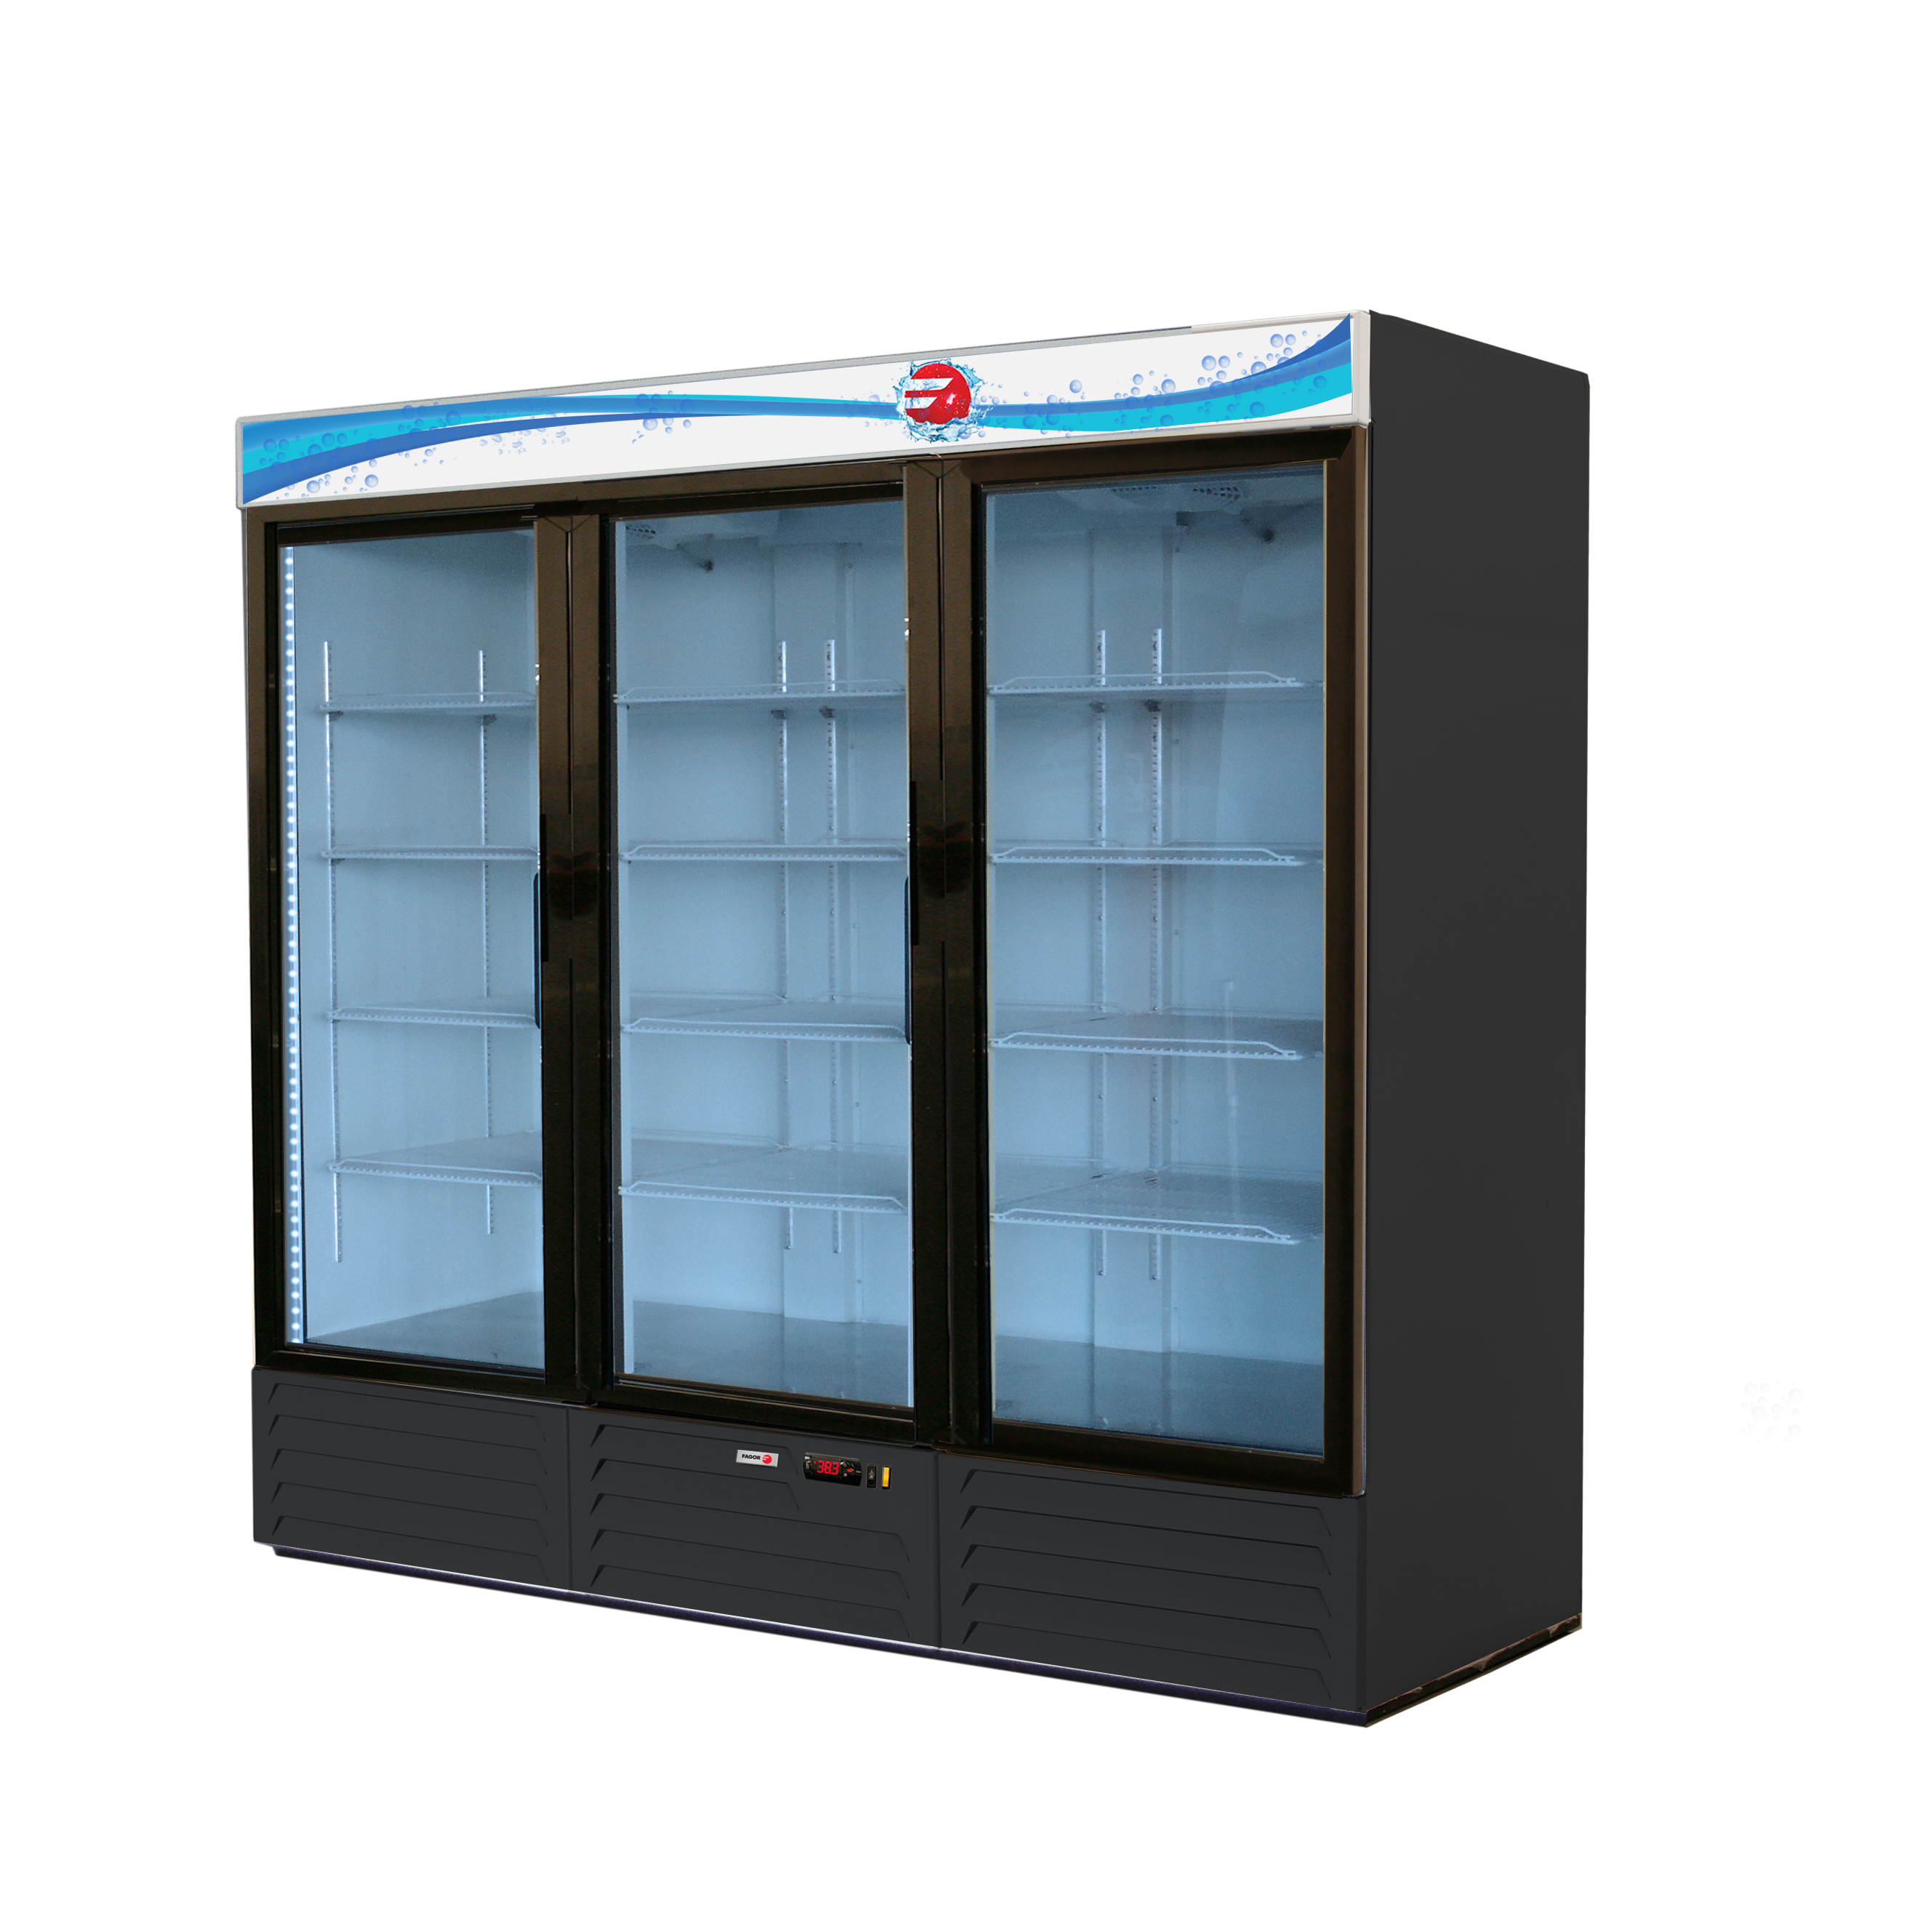 Fagor Refrigeration FMD-72 Merchandiser Refrigerator